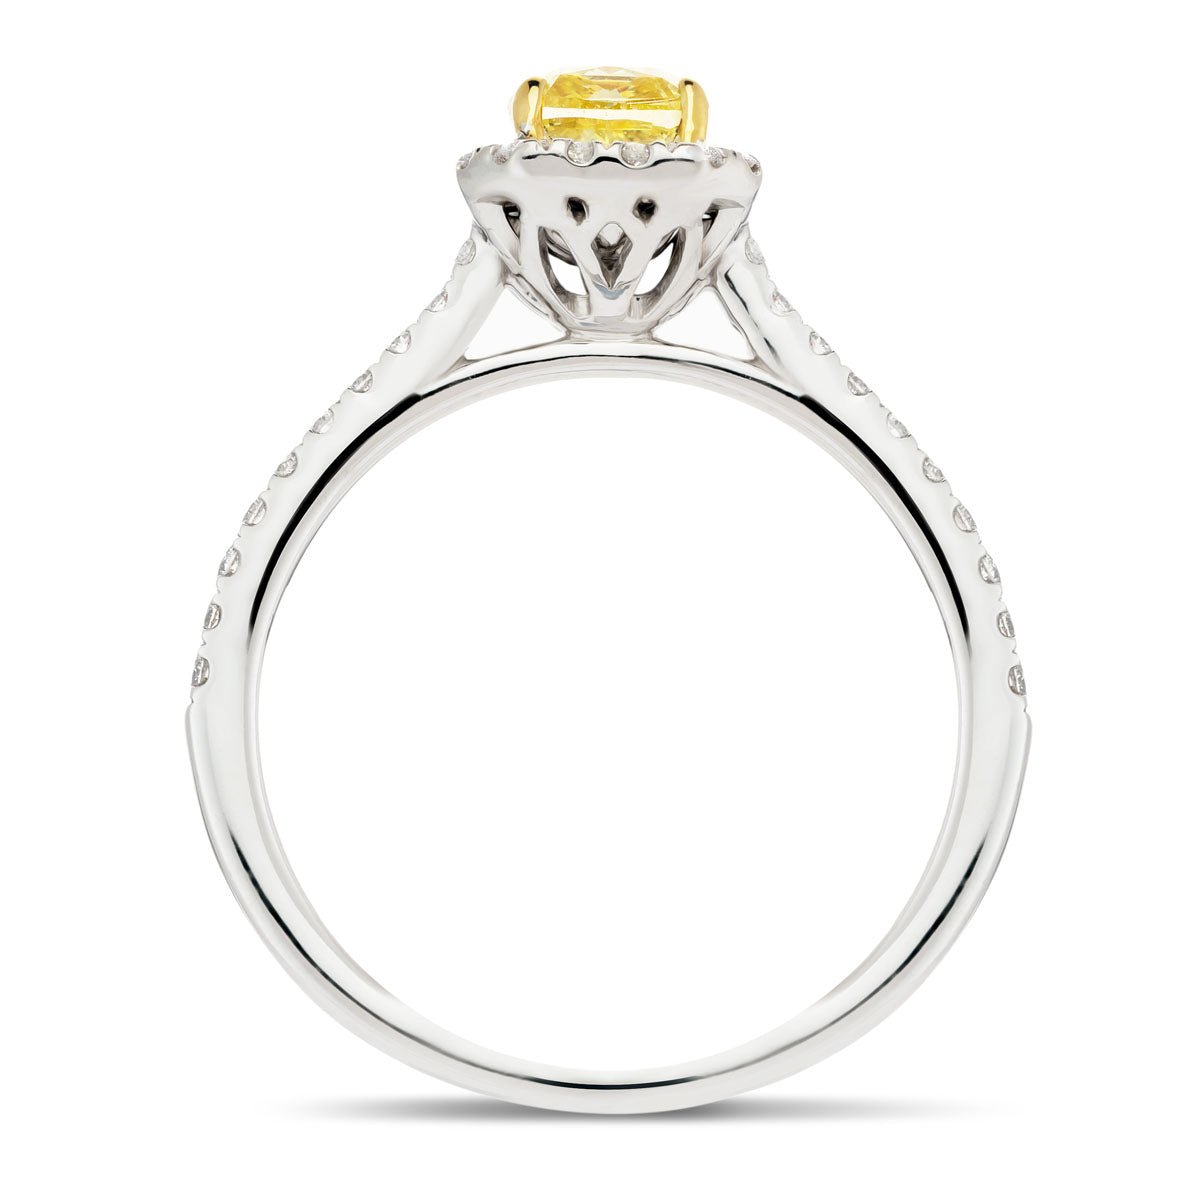 Certified Cushion Yellow Diamond Engagement Ring 1.30ct Ring in Platinum - All Diamond